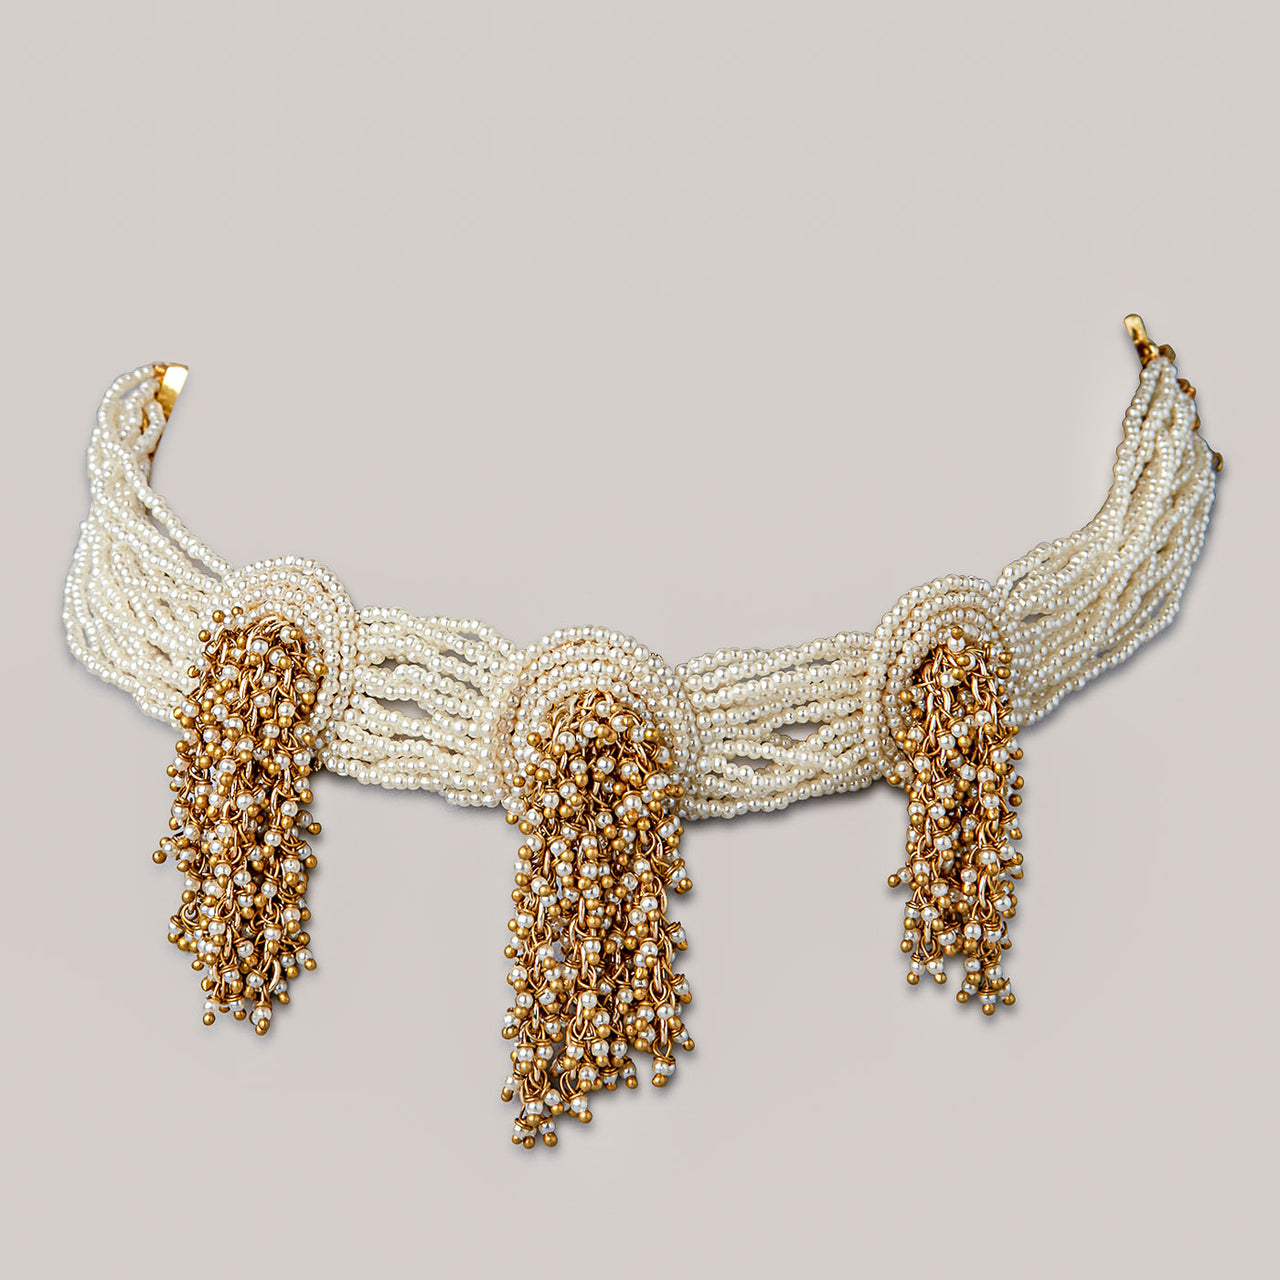 Tahitian Pearl Jewelry Set in White Gold | KLENOTA